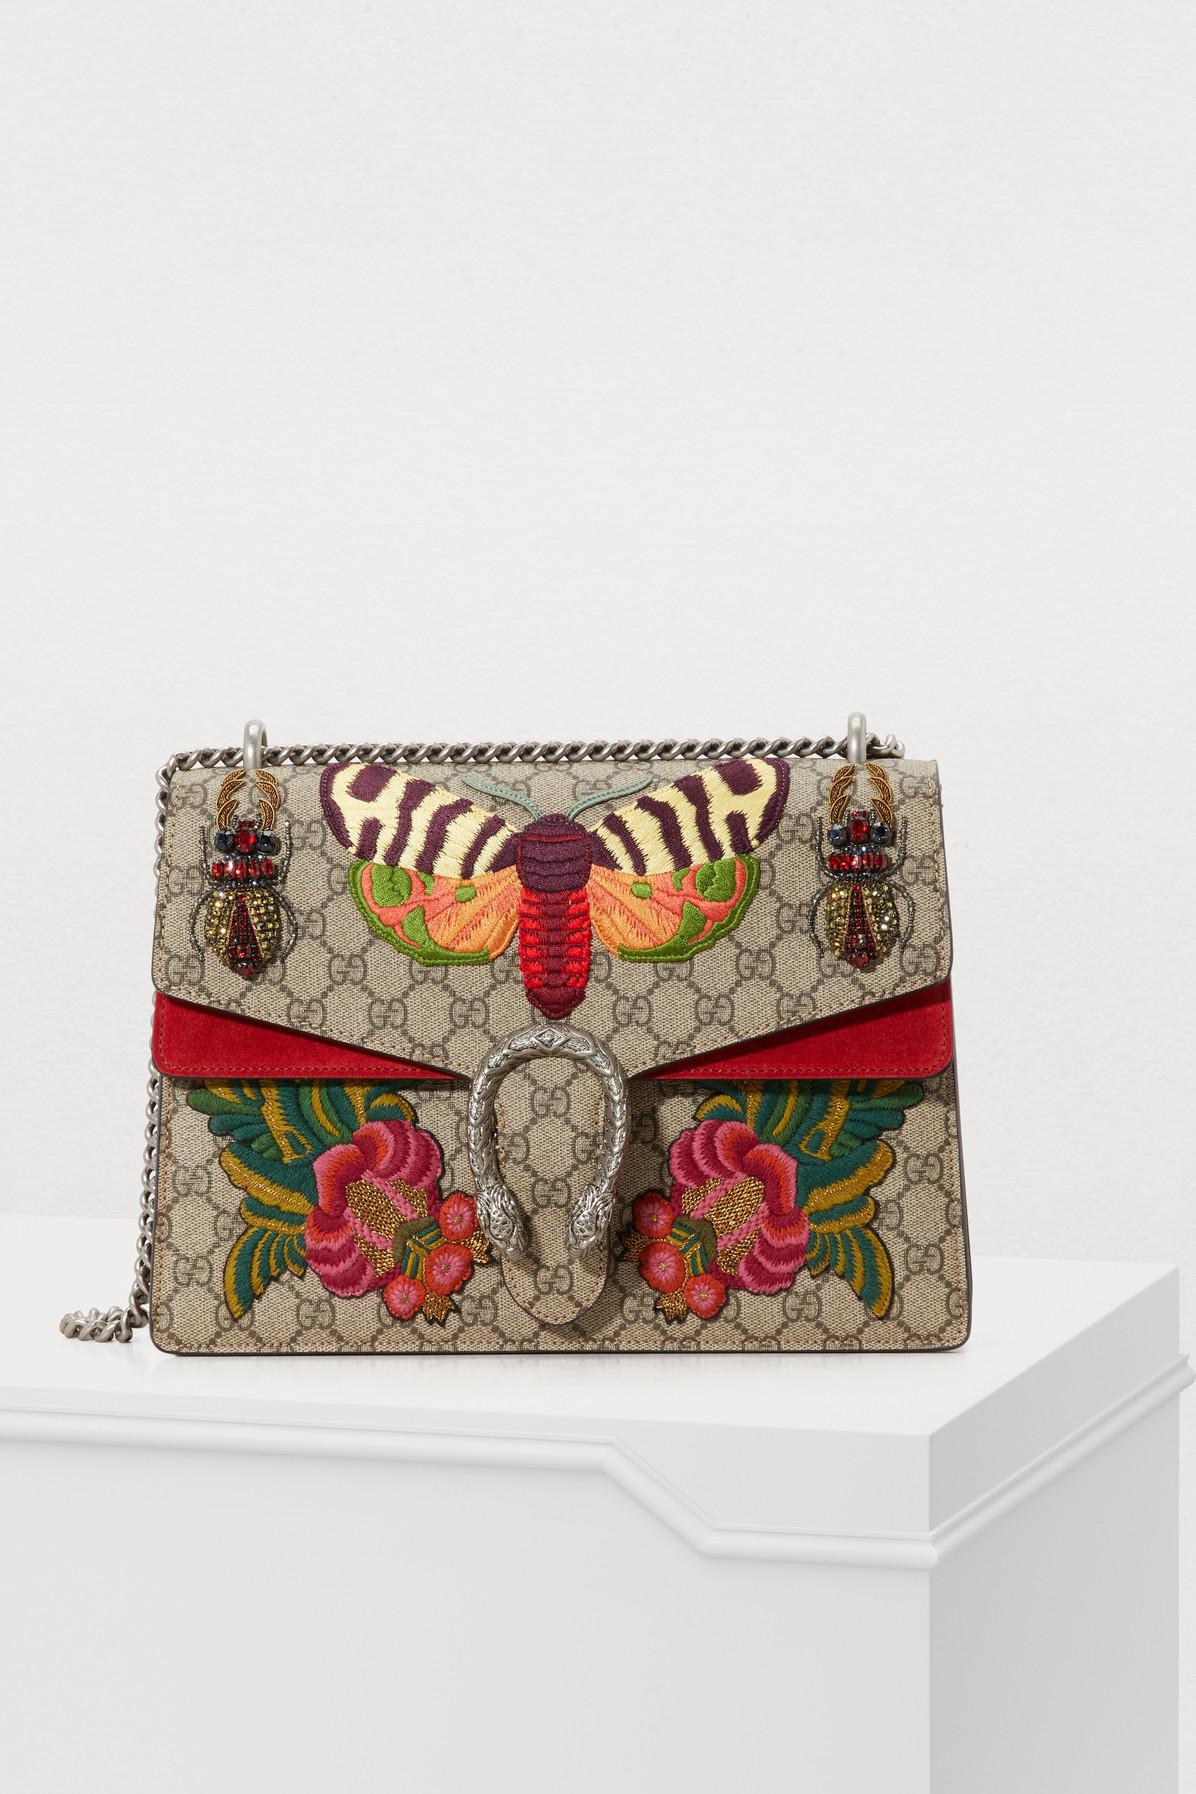 Gucci Canvas Dionysus Medium Shoulder Bag in Red - Lyst